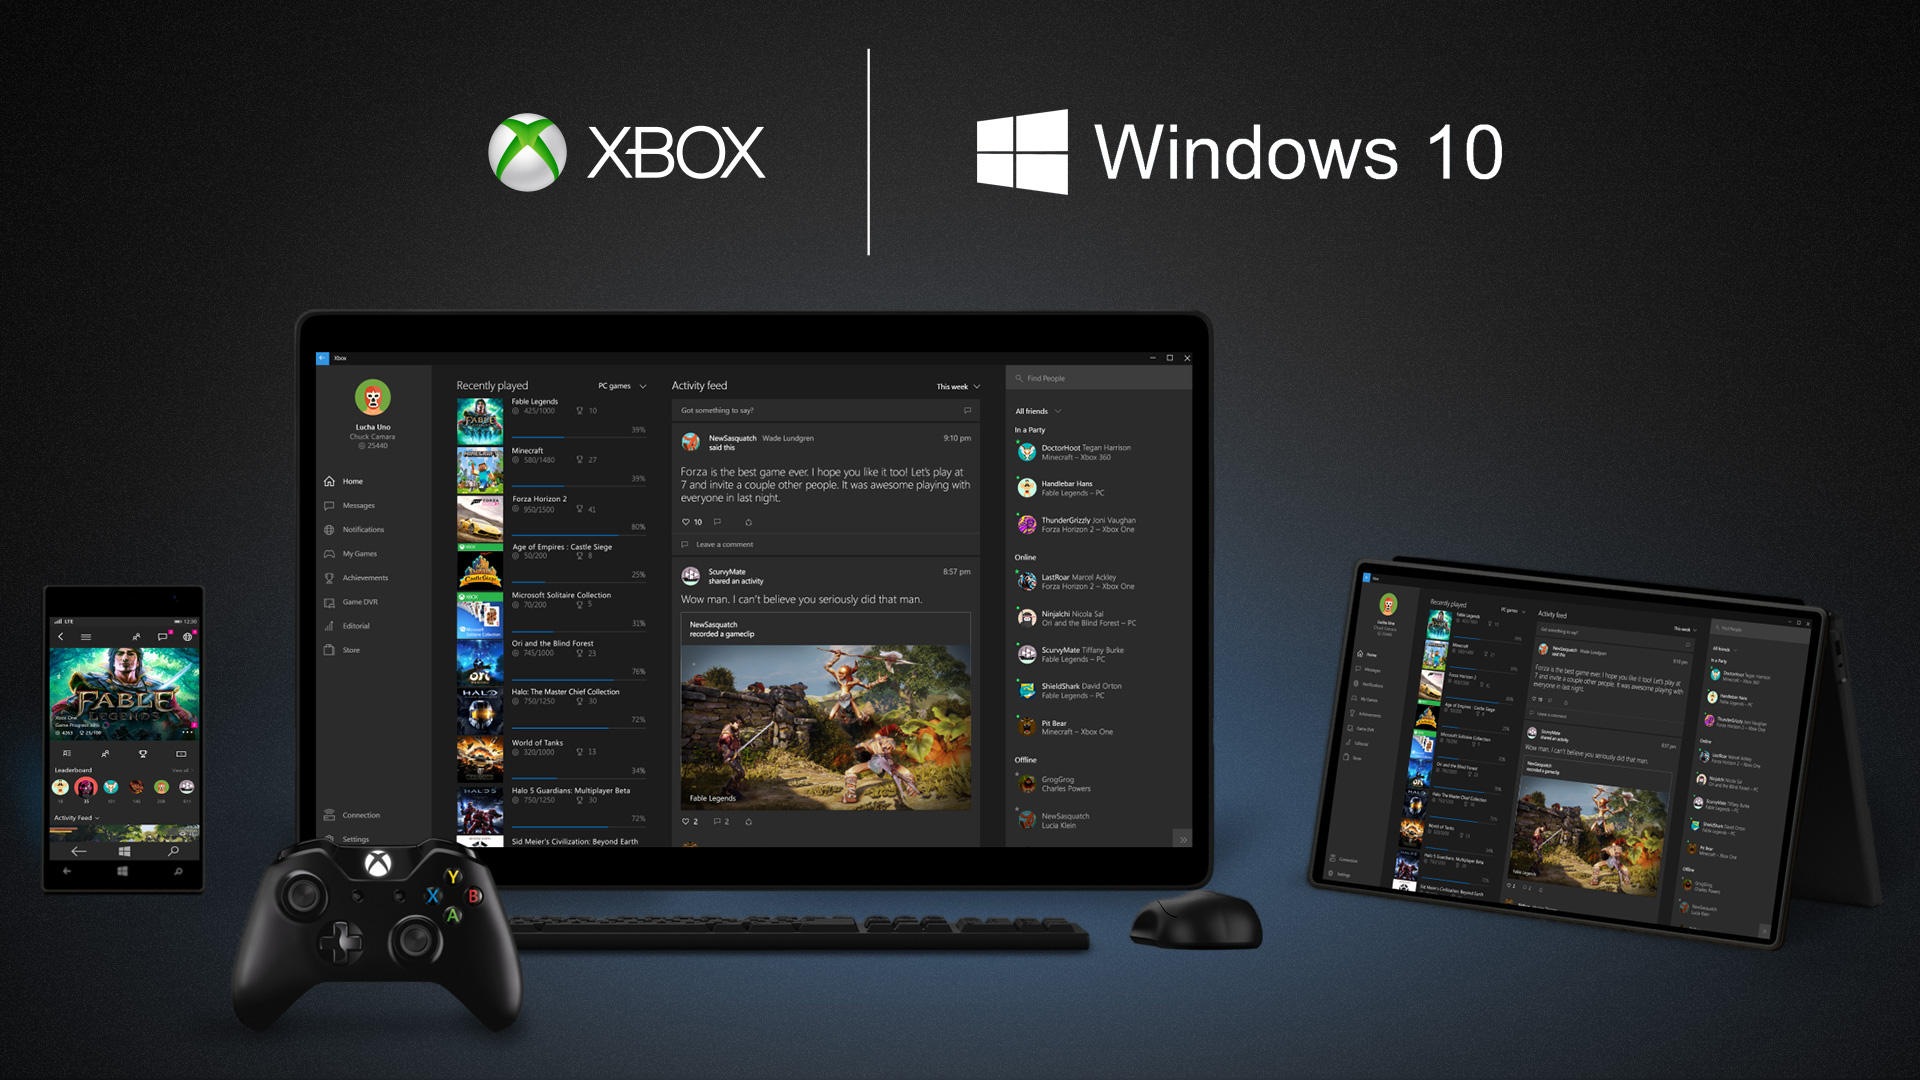 Windows 10 Xbox streaming app